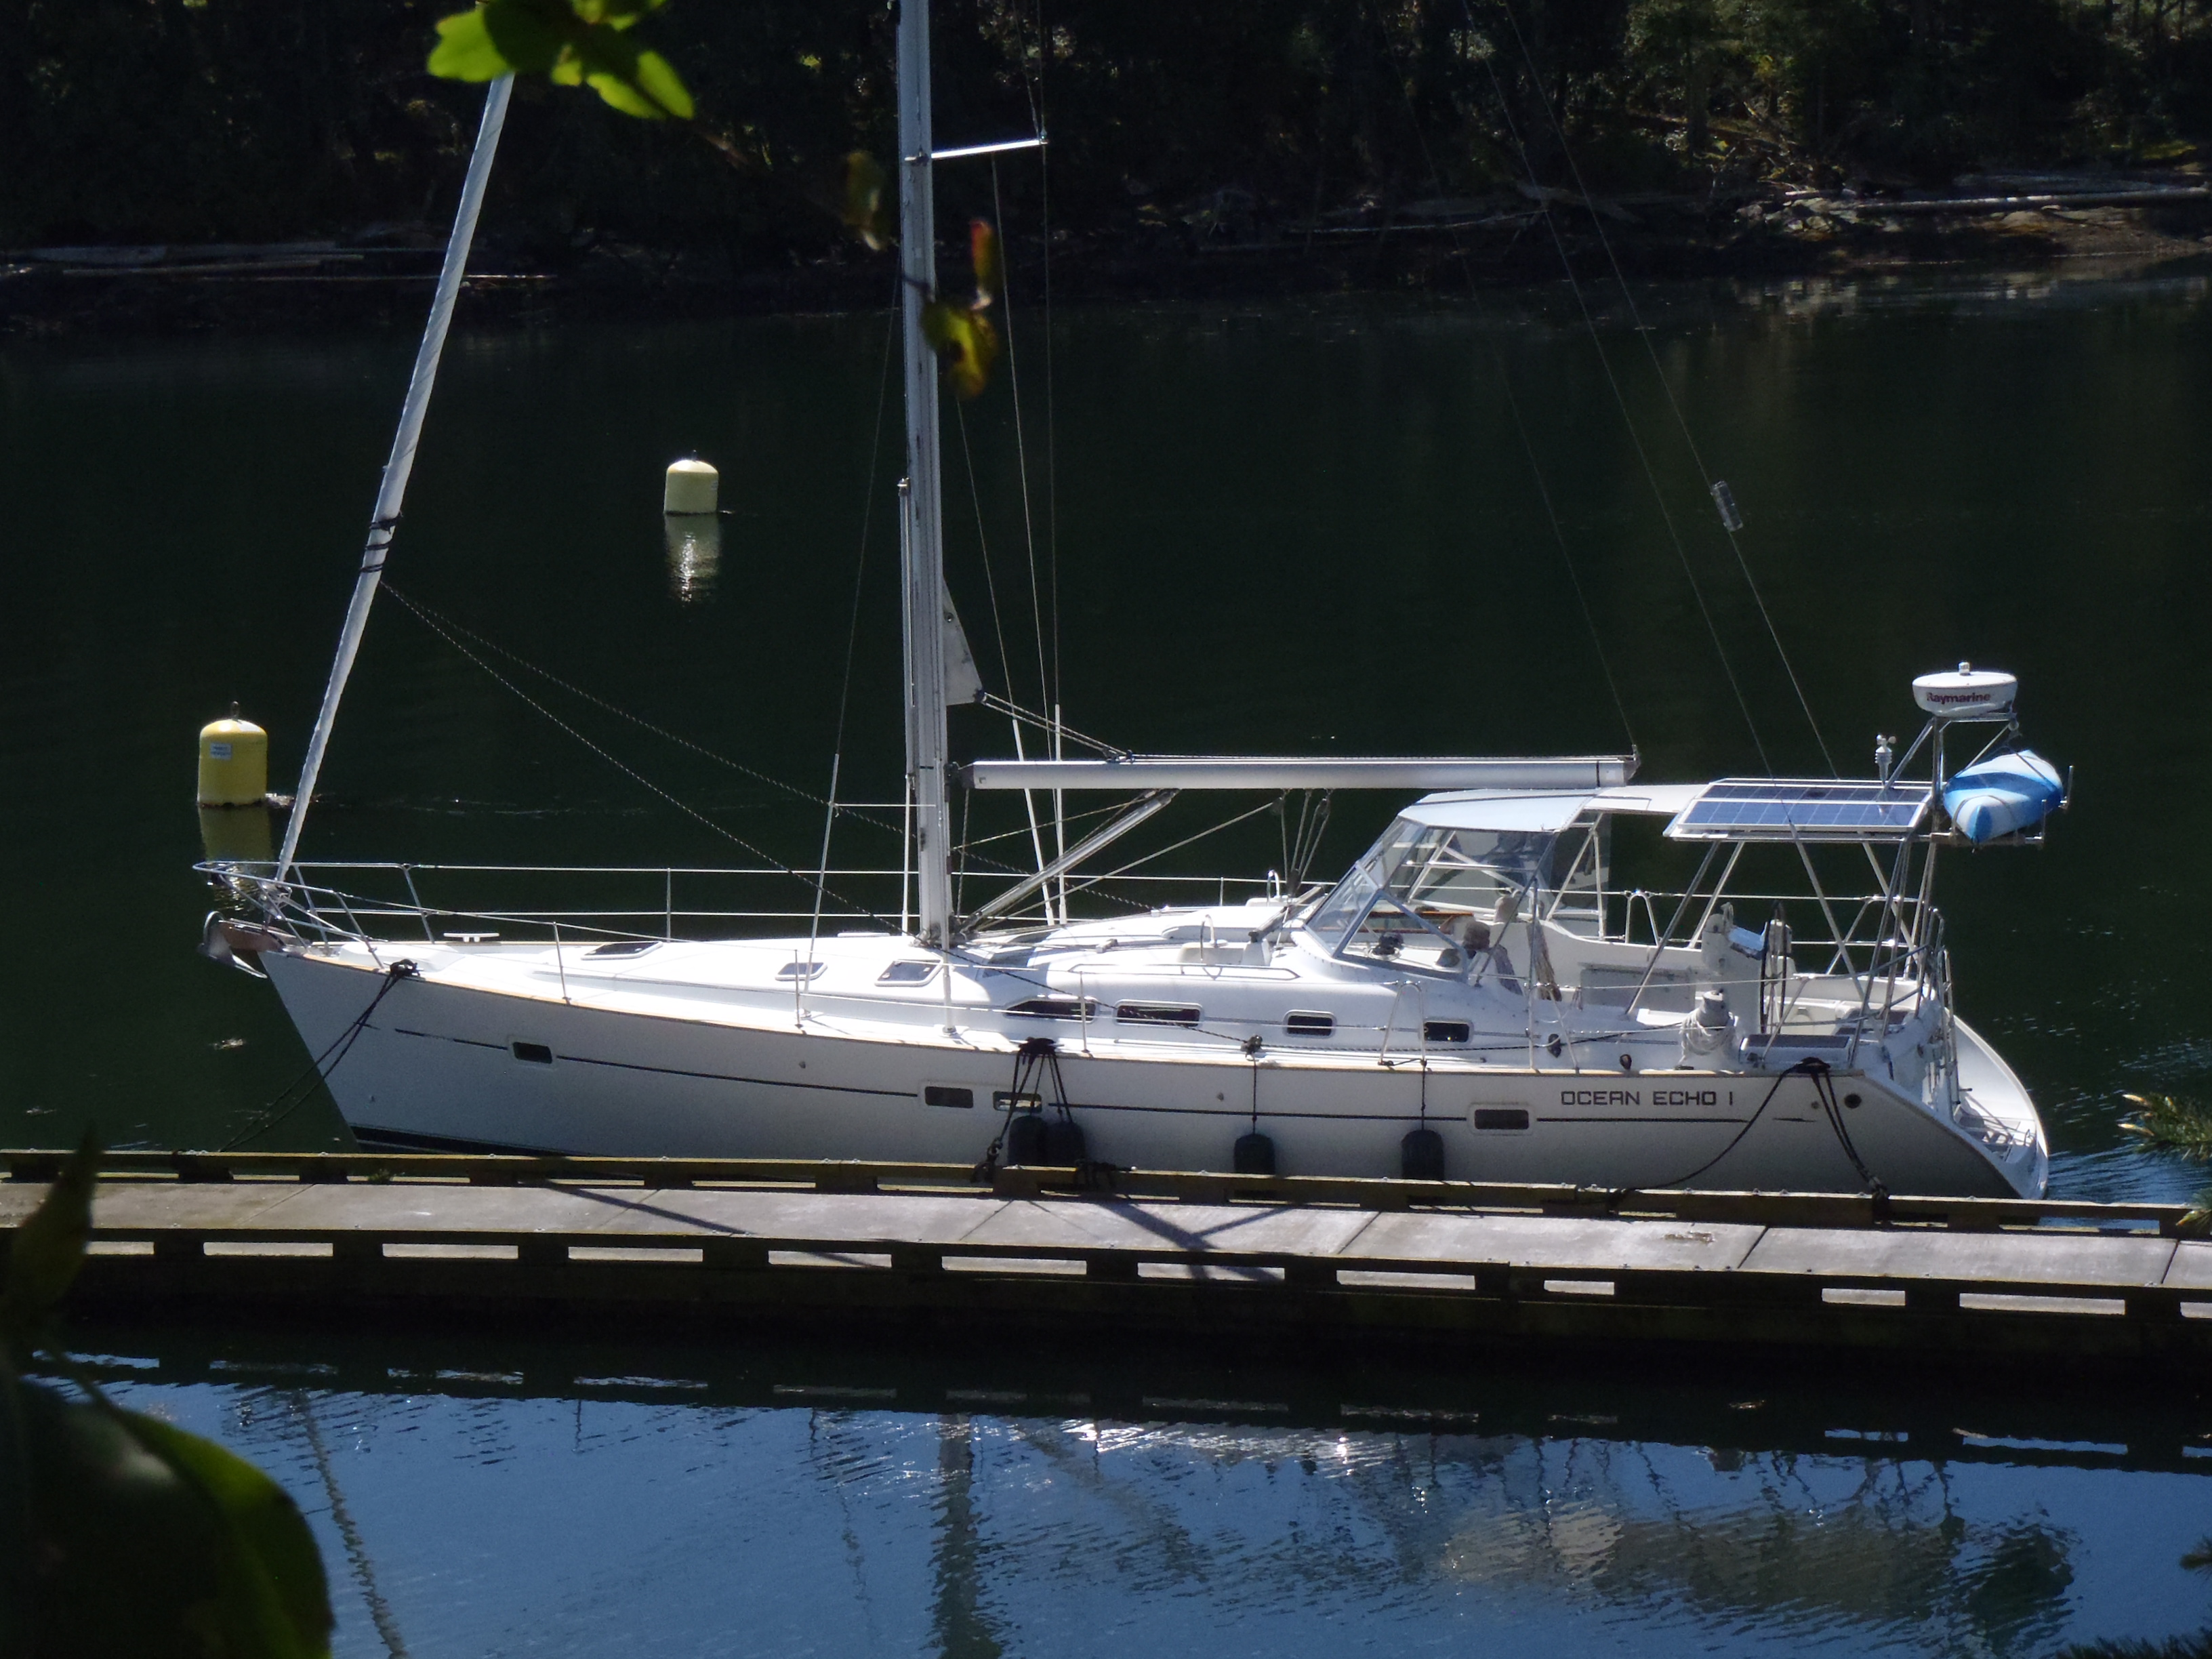 2007 Beneteau 423 Sailboat for sale in British Columbia, Canada - image 1 